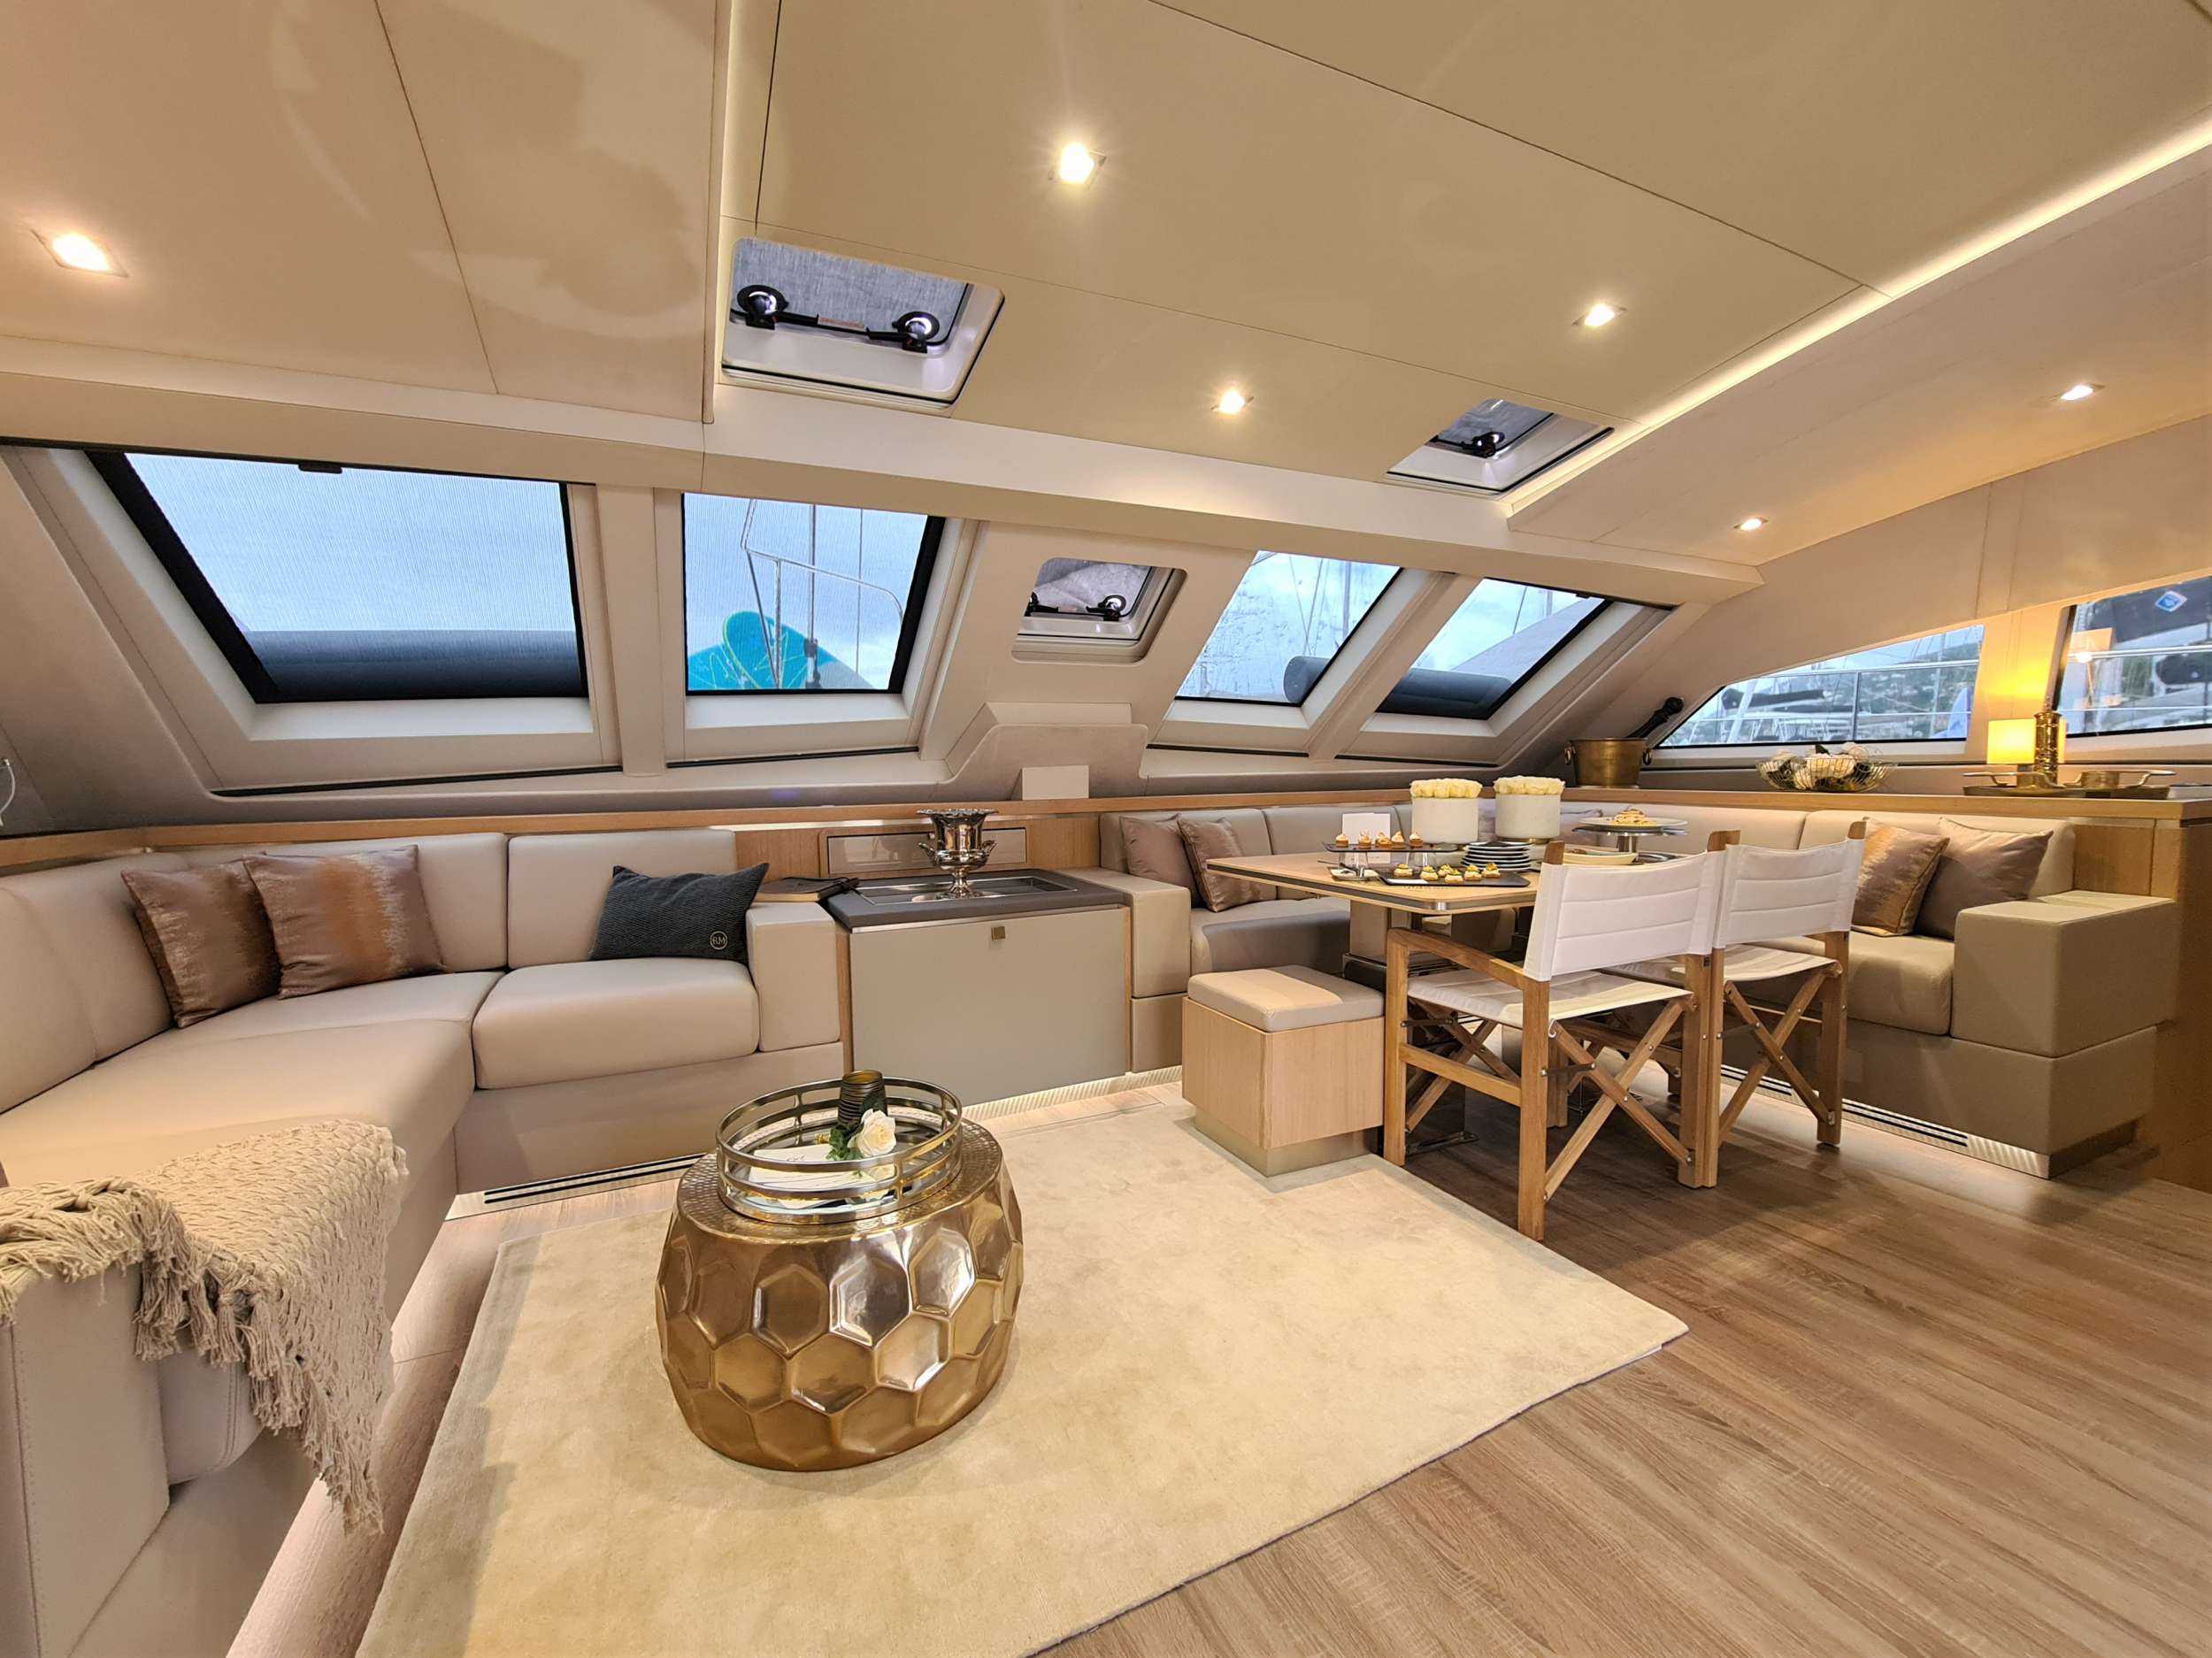 Catamaran Yacht 'ALLURE 64' Salon, 6 PAX, 3 Crew, 64.00 Ft, 19.00 Meters, Built 2020, Privilege